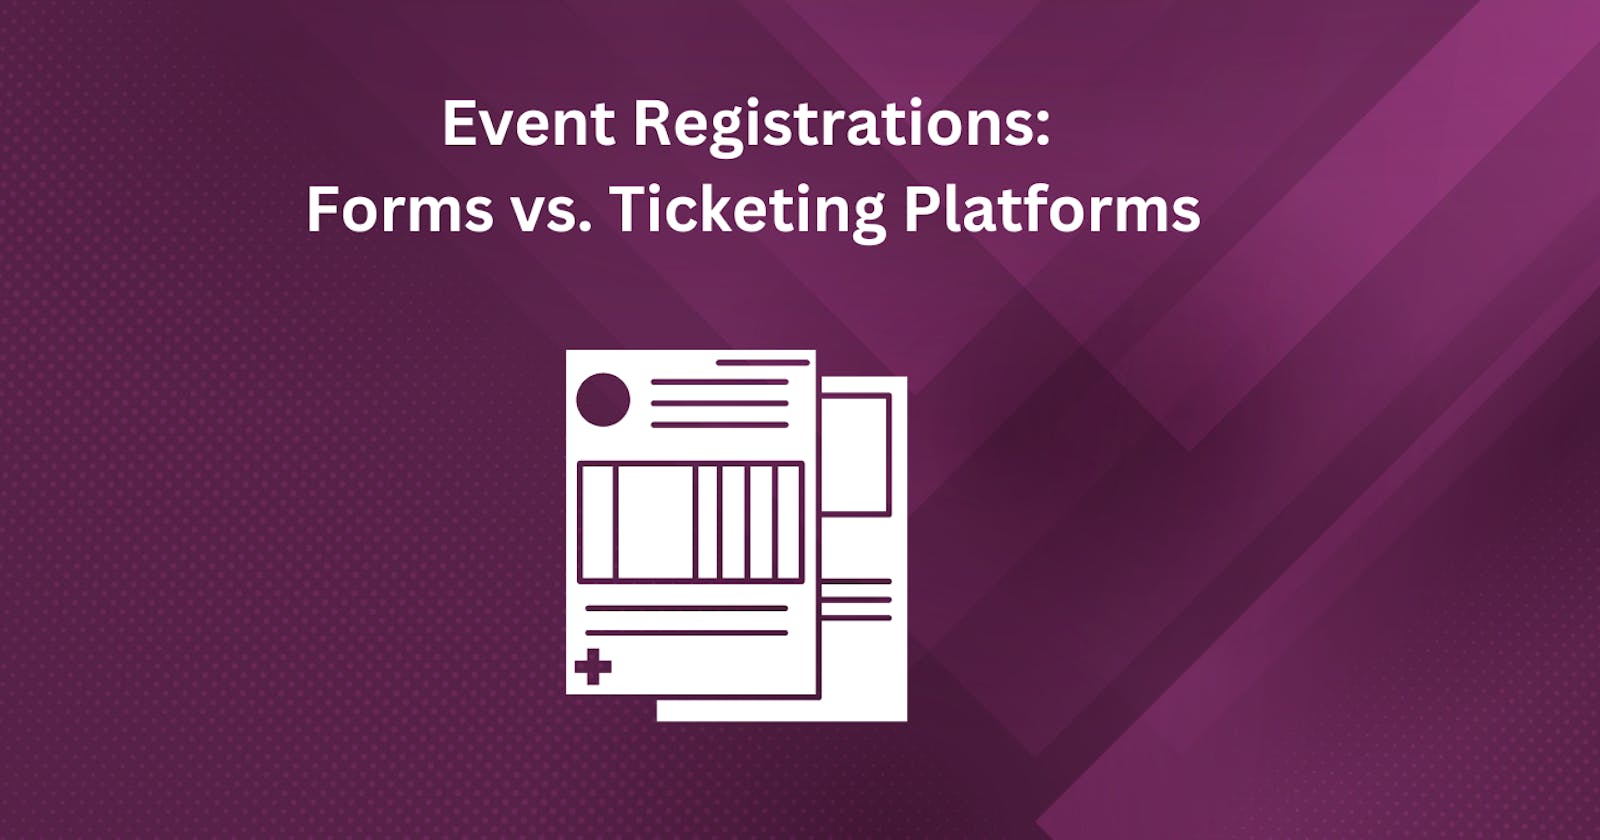 Event Registrations: Forms vs. Ticketing Platforms